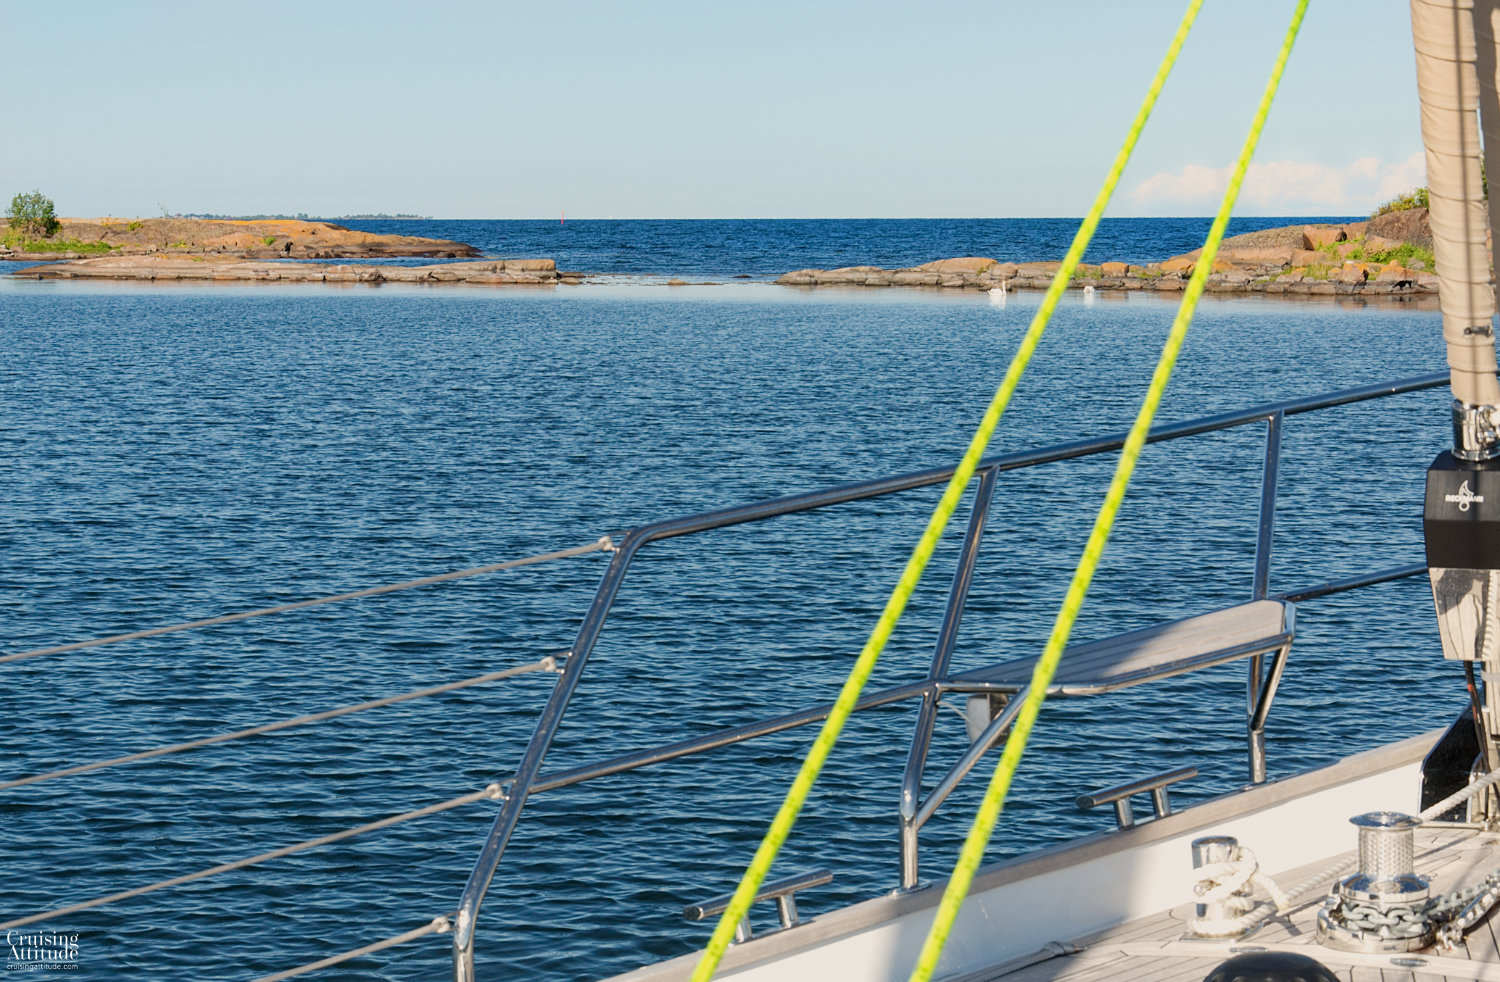 Kiddeholmen Anchorage | Cruising Attitude Sailing Blog - Discovery 55